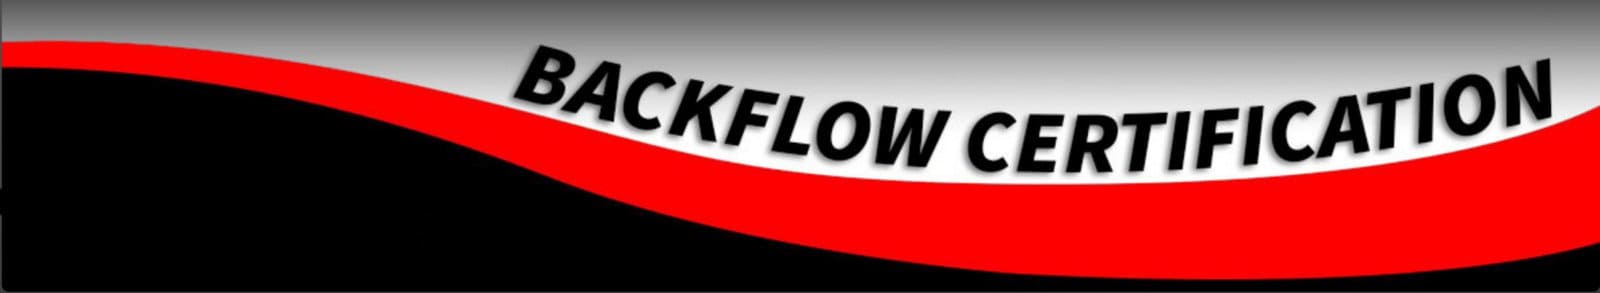 Backflow Service